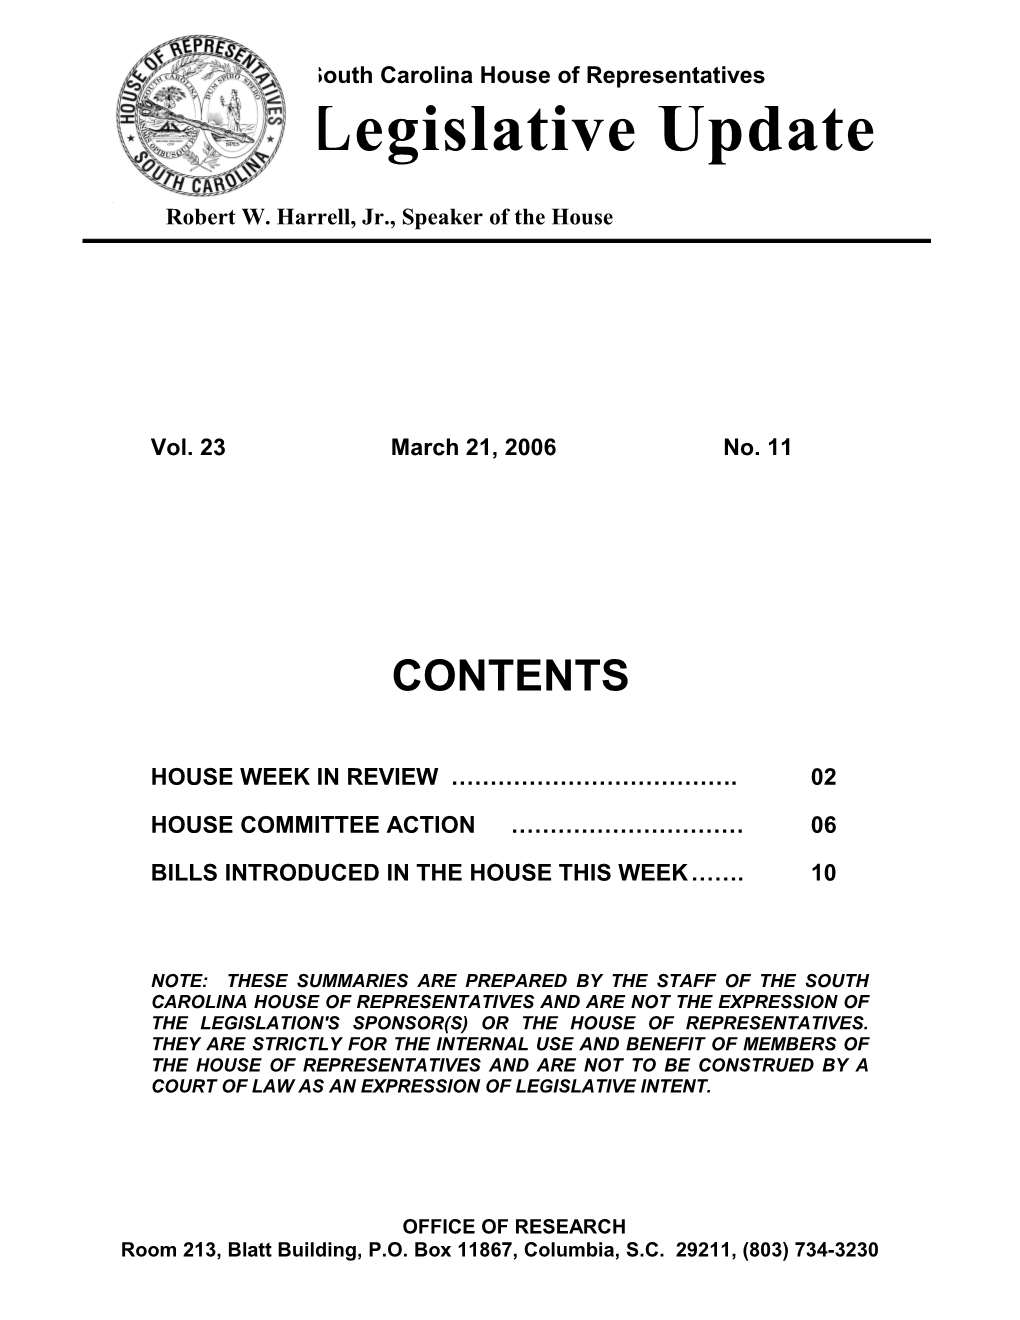 Legislative Update - Vol. 23 No. 11 March 21, 2006 - South Carolina Legislature Online